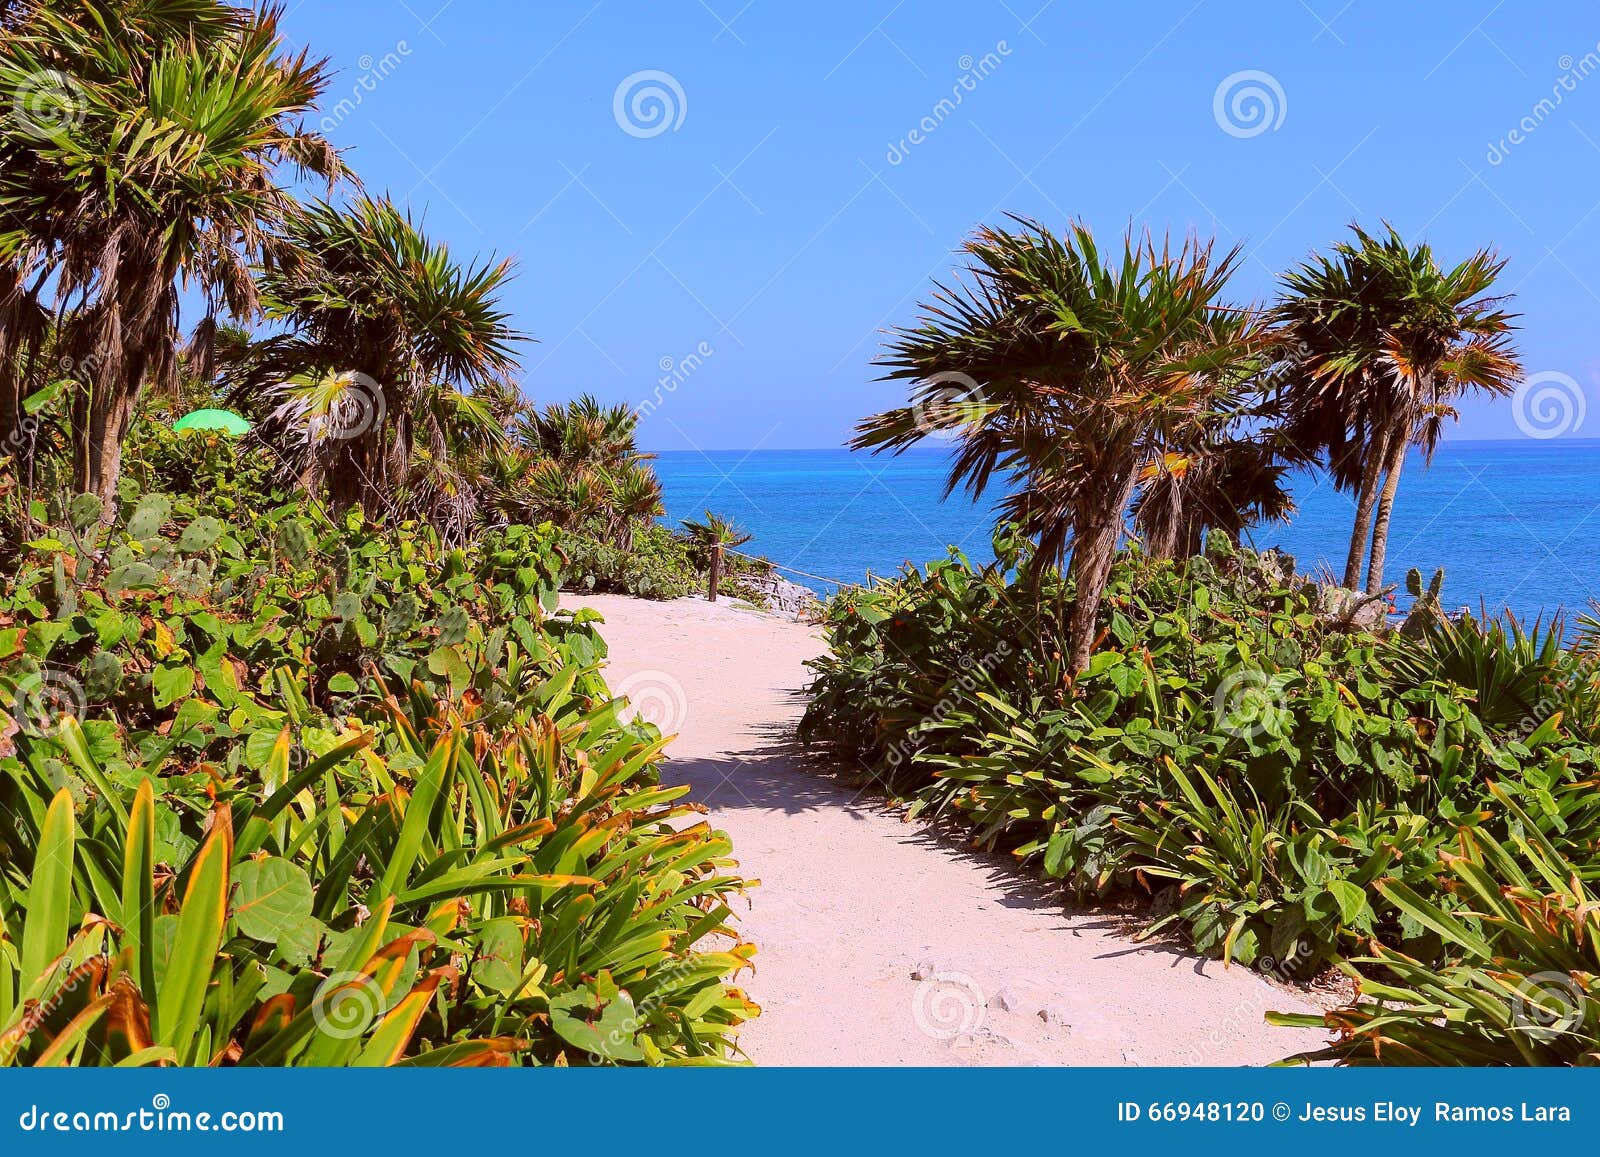 palms near the sea in tulum, quintana roo